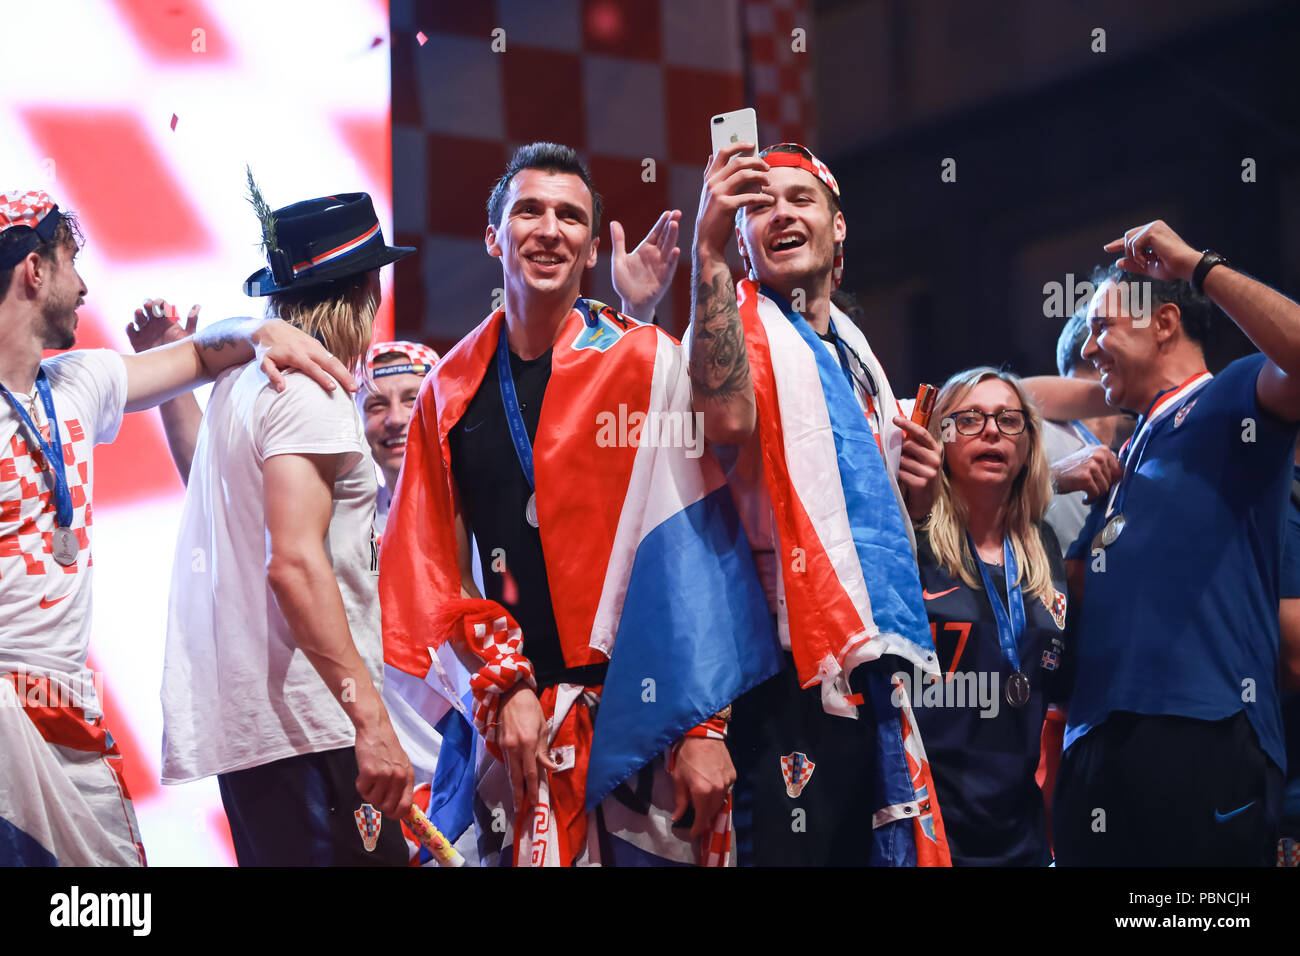 ZAGREB, CROATIA - JULY 16, 2018 : Croatia National Football Team welcome home celebration - Mario Mandzukic and Duje Caleta Car celebrating on the sta Stock Photo